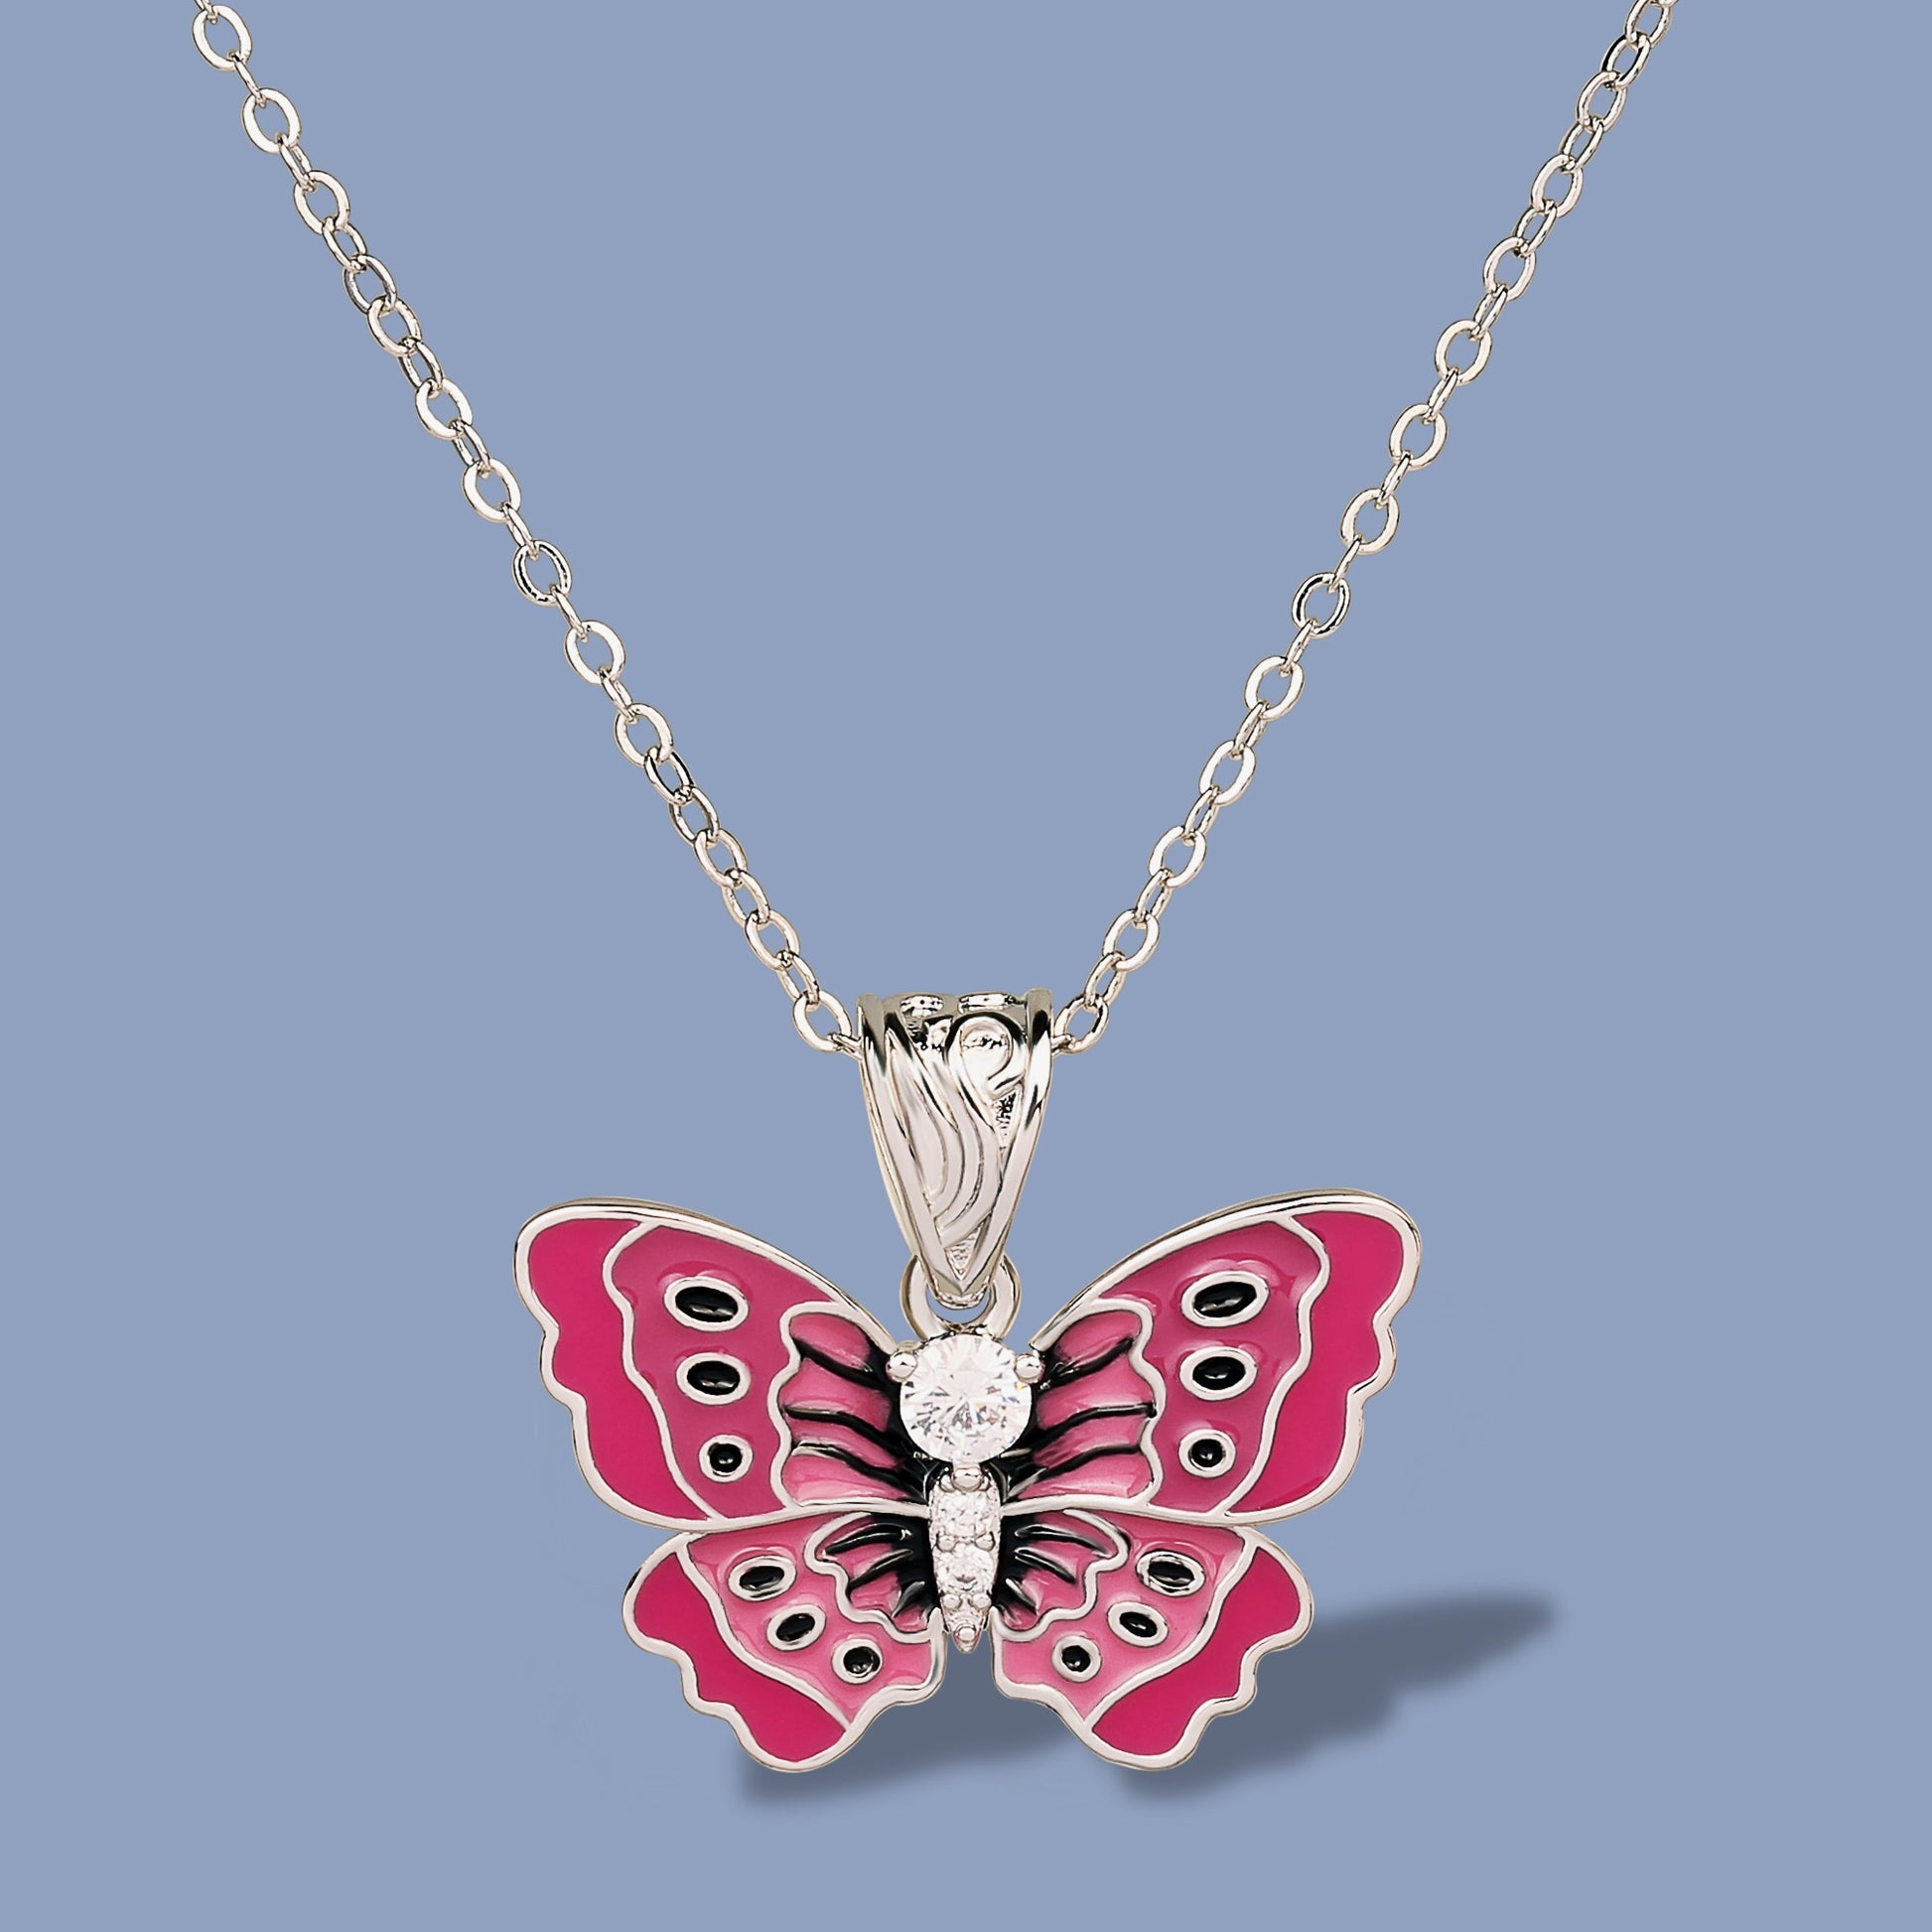 Butterfly Enamel Pendant Necklace for women with Zircon dazzling in 925 Silver